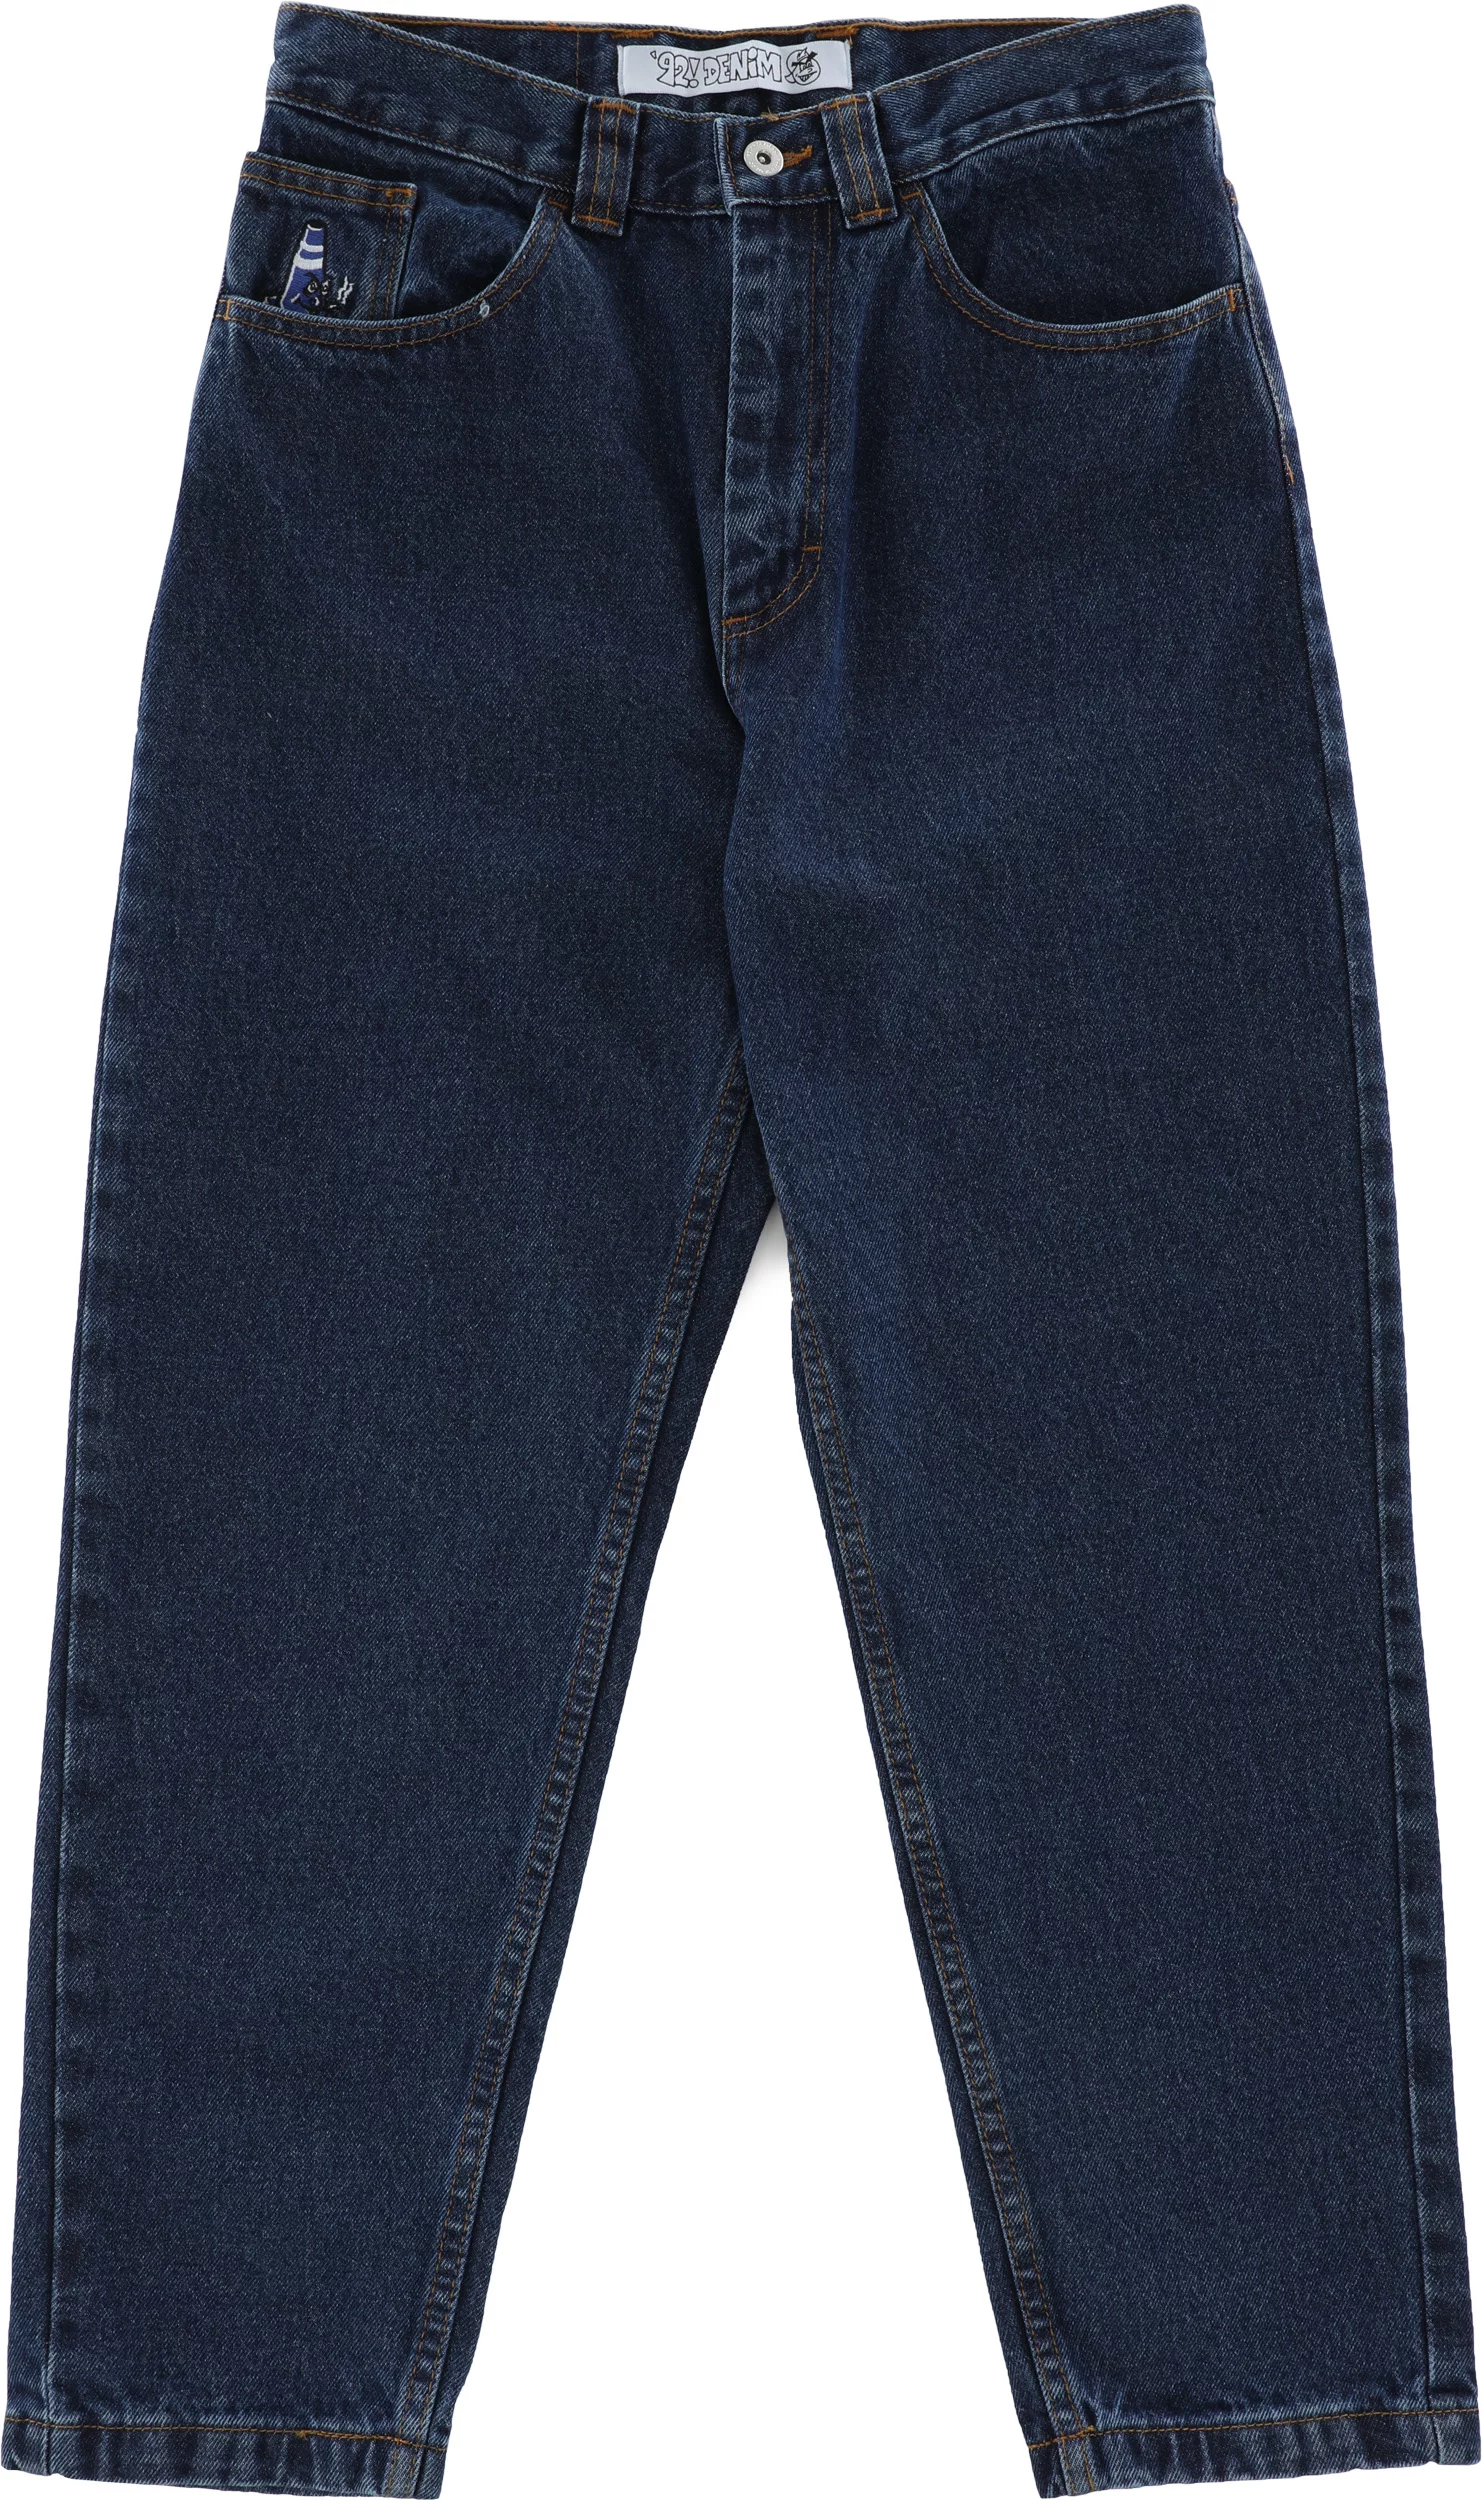 Polar Skate Co. '92! Denim Jeans - dark blue - Free Shipping | Tactics